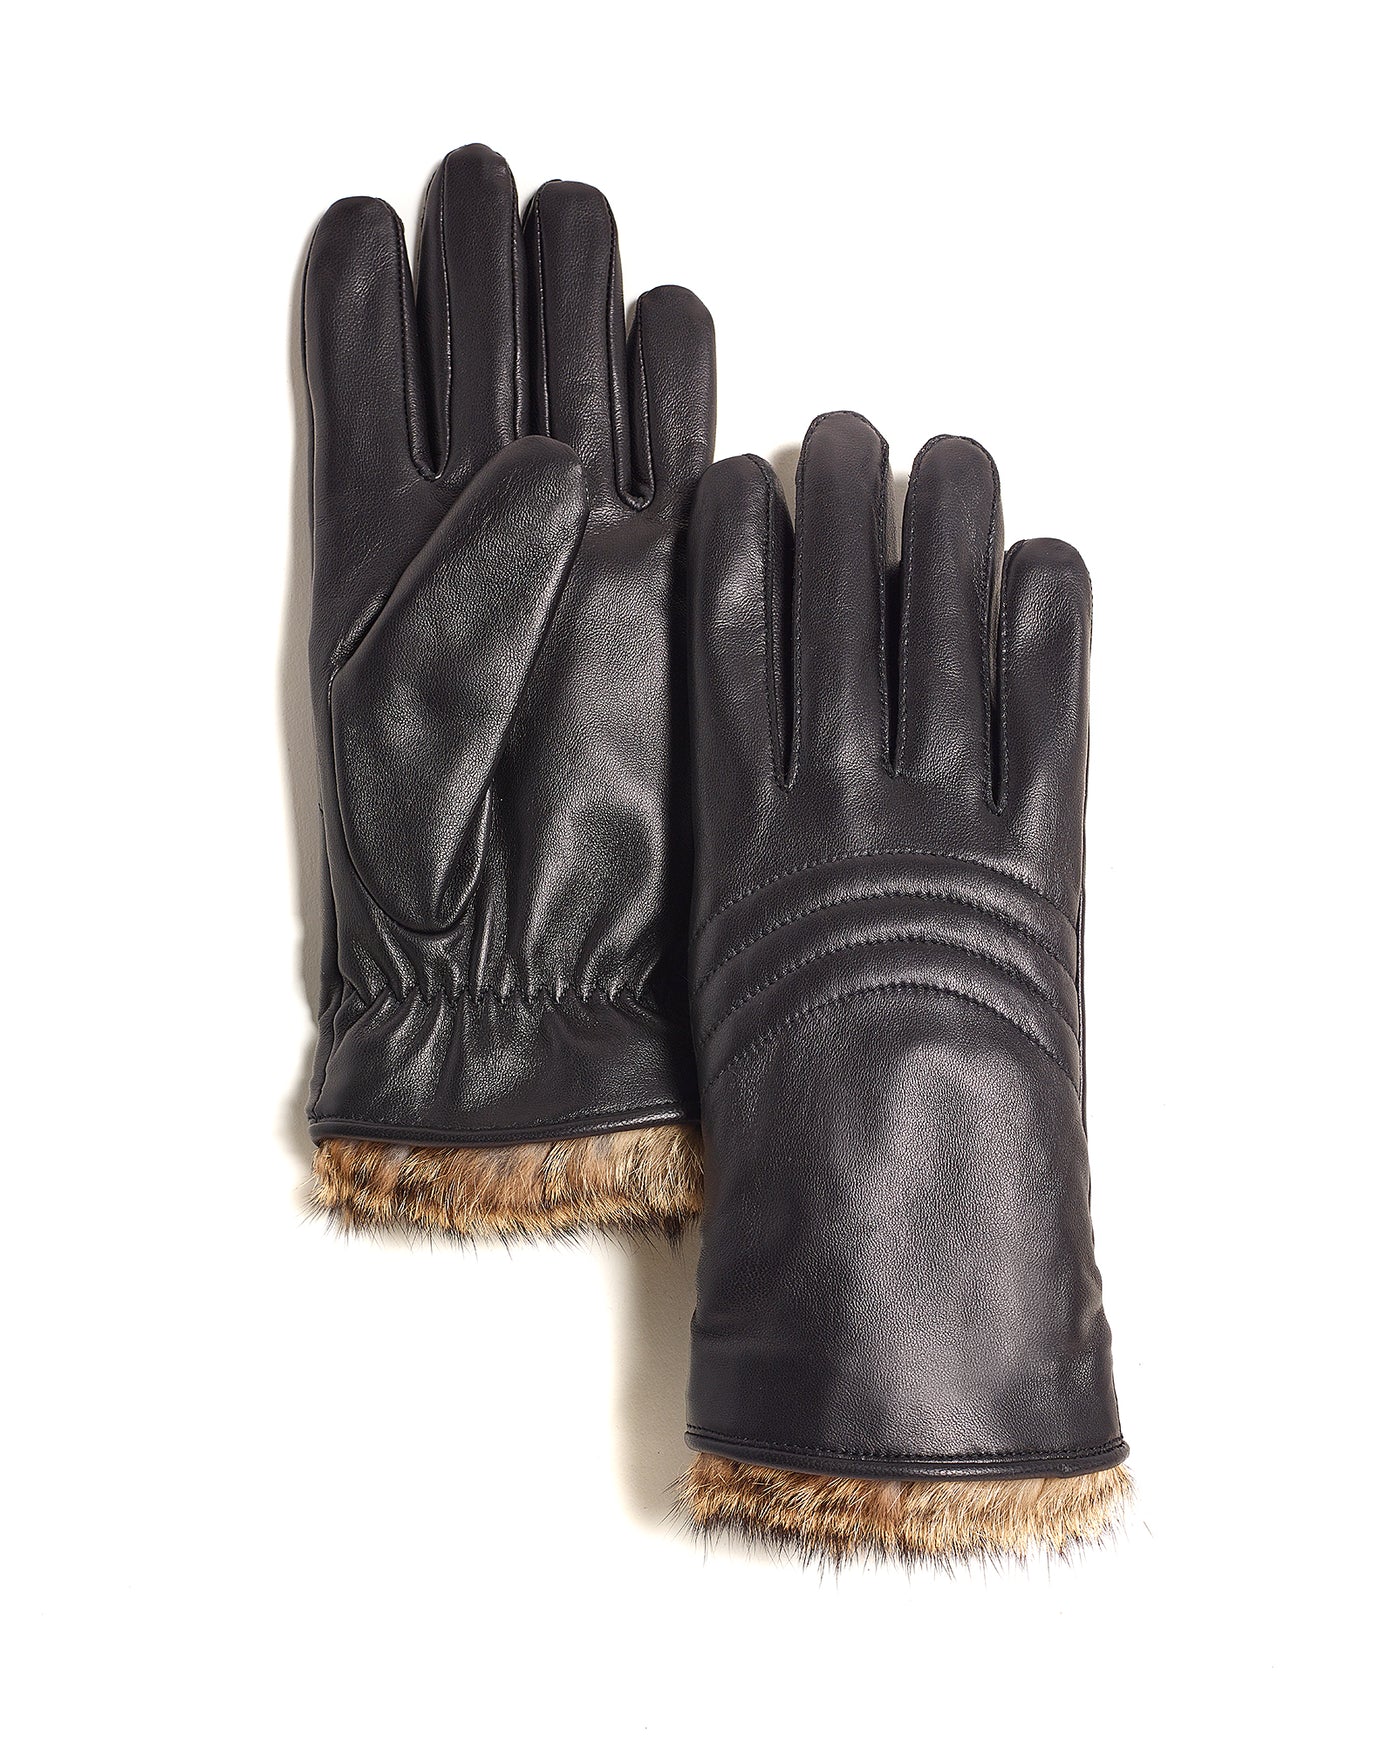 The Maple Ridge Glove